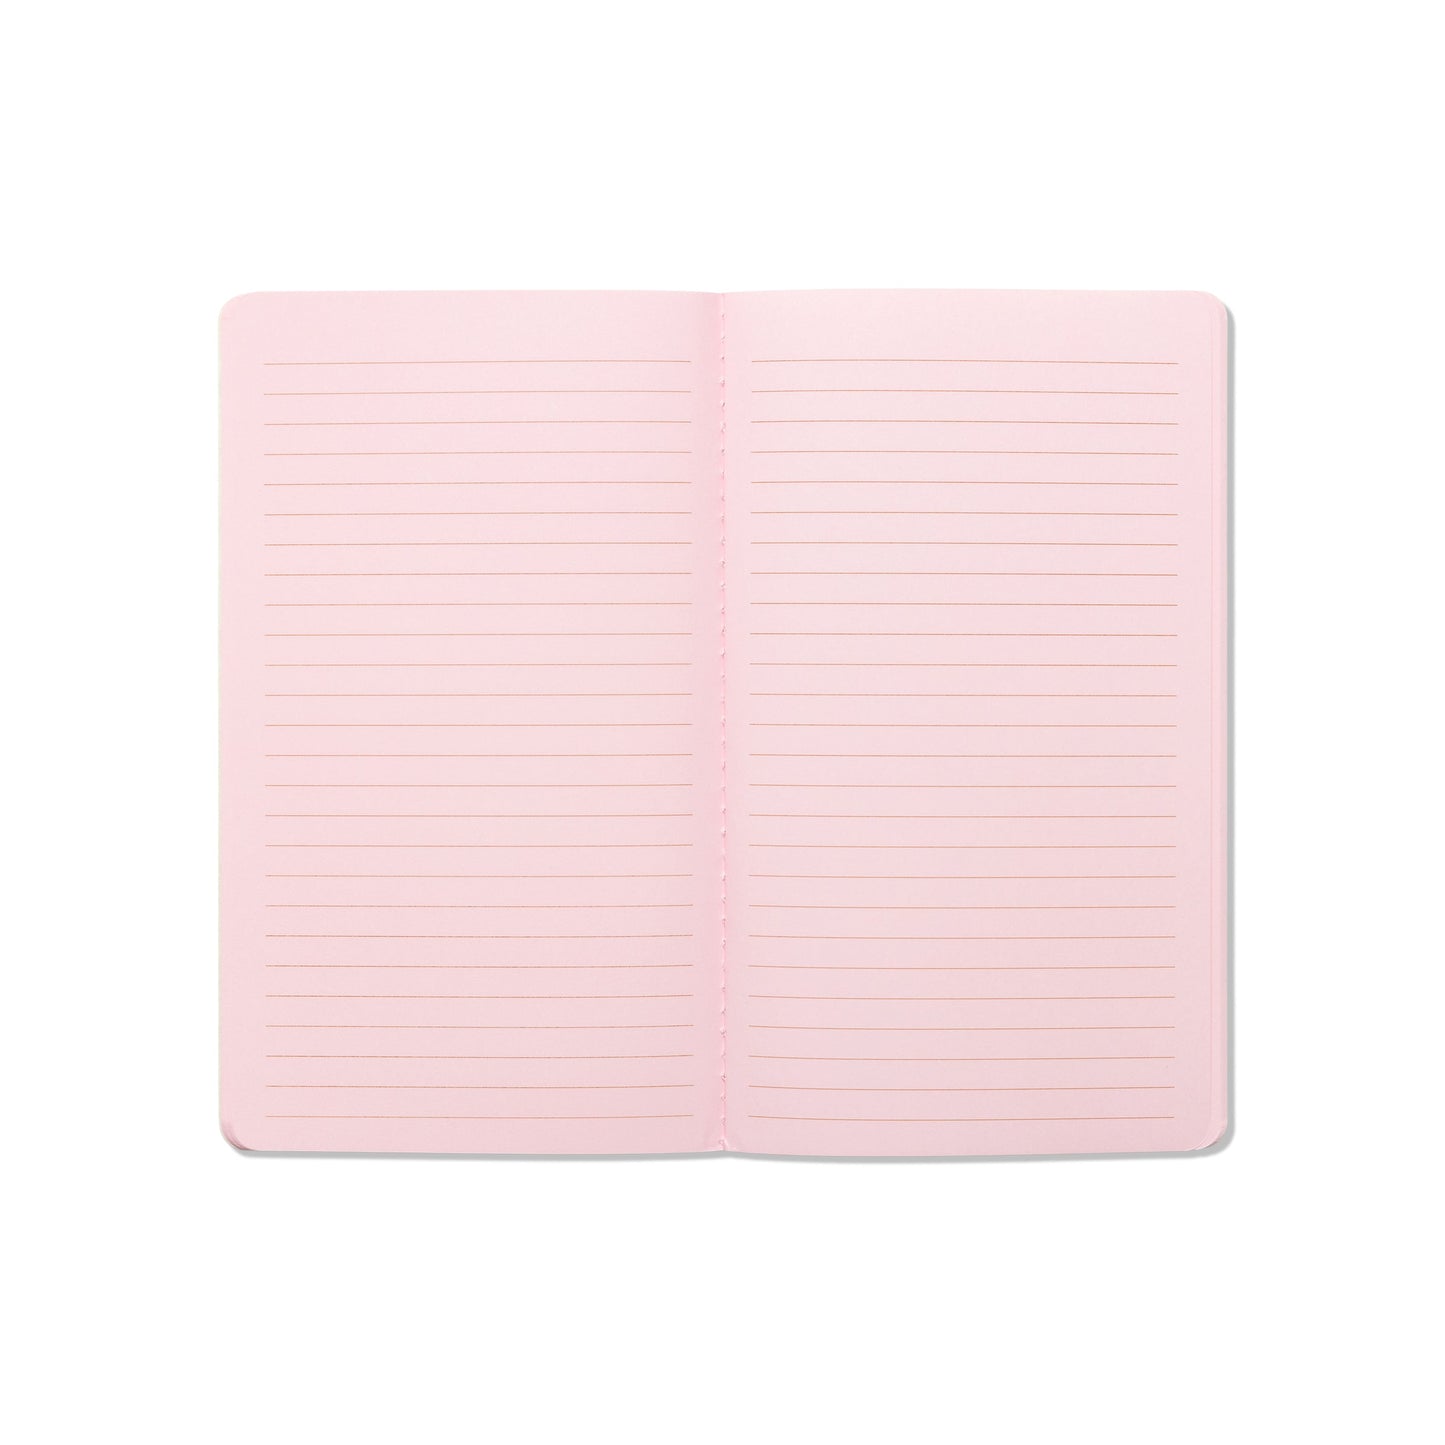 Set of 3 Single Flex Notebooks - Dreams (Plans, Daydreams, Important Dates)